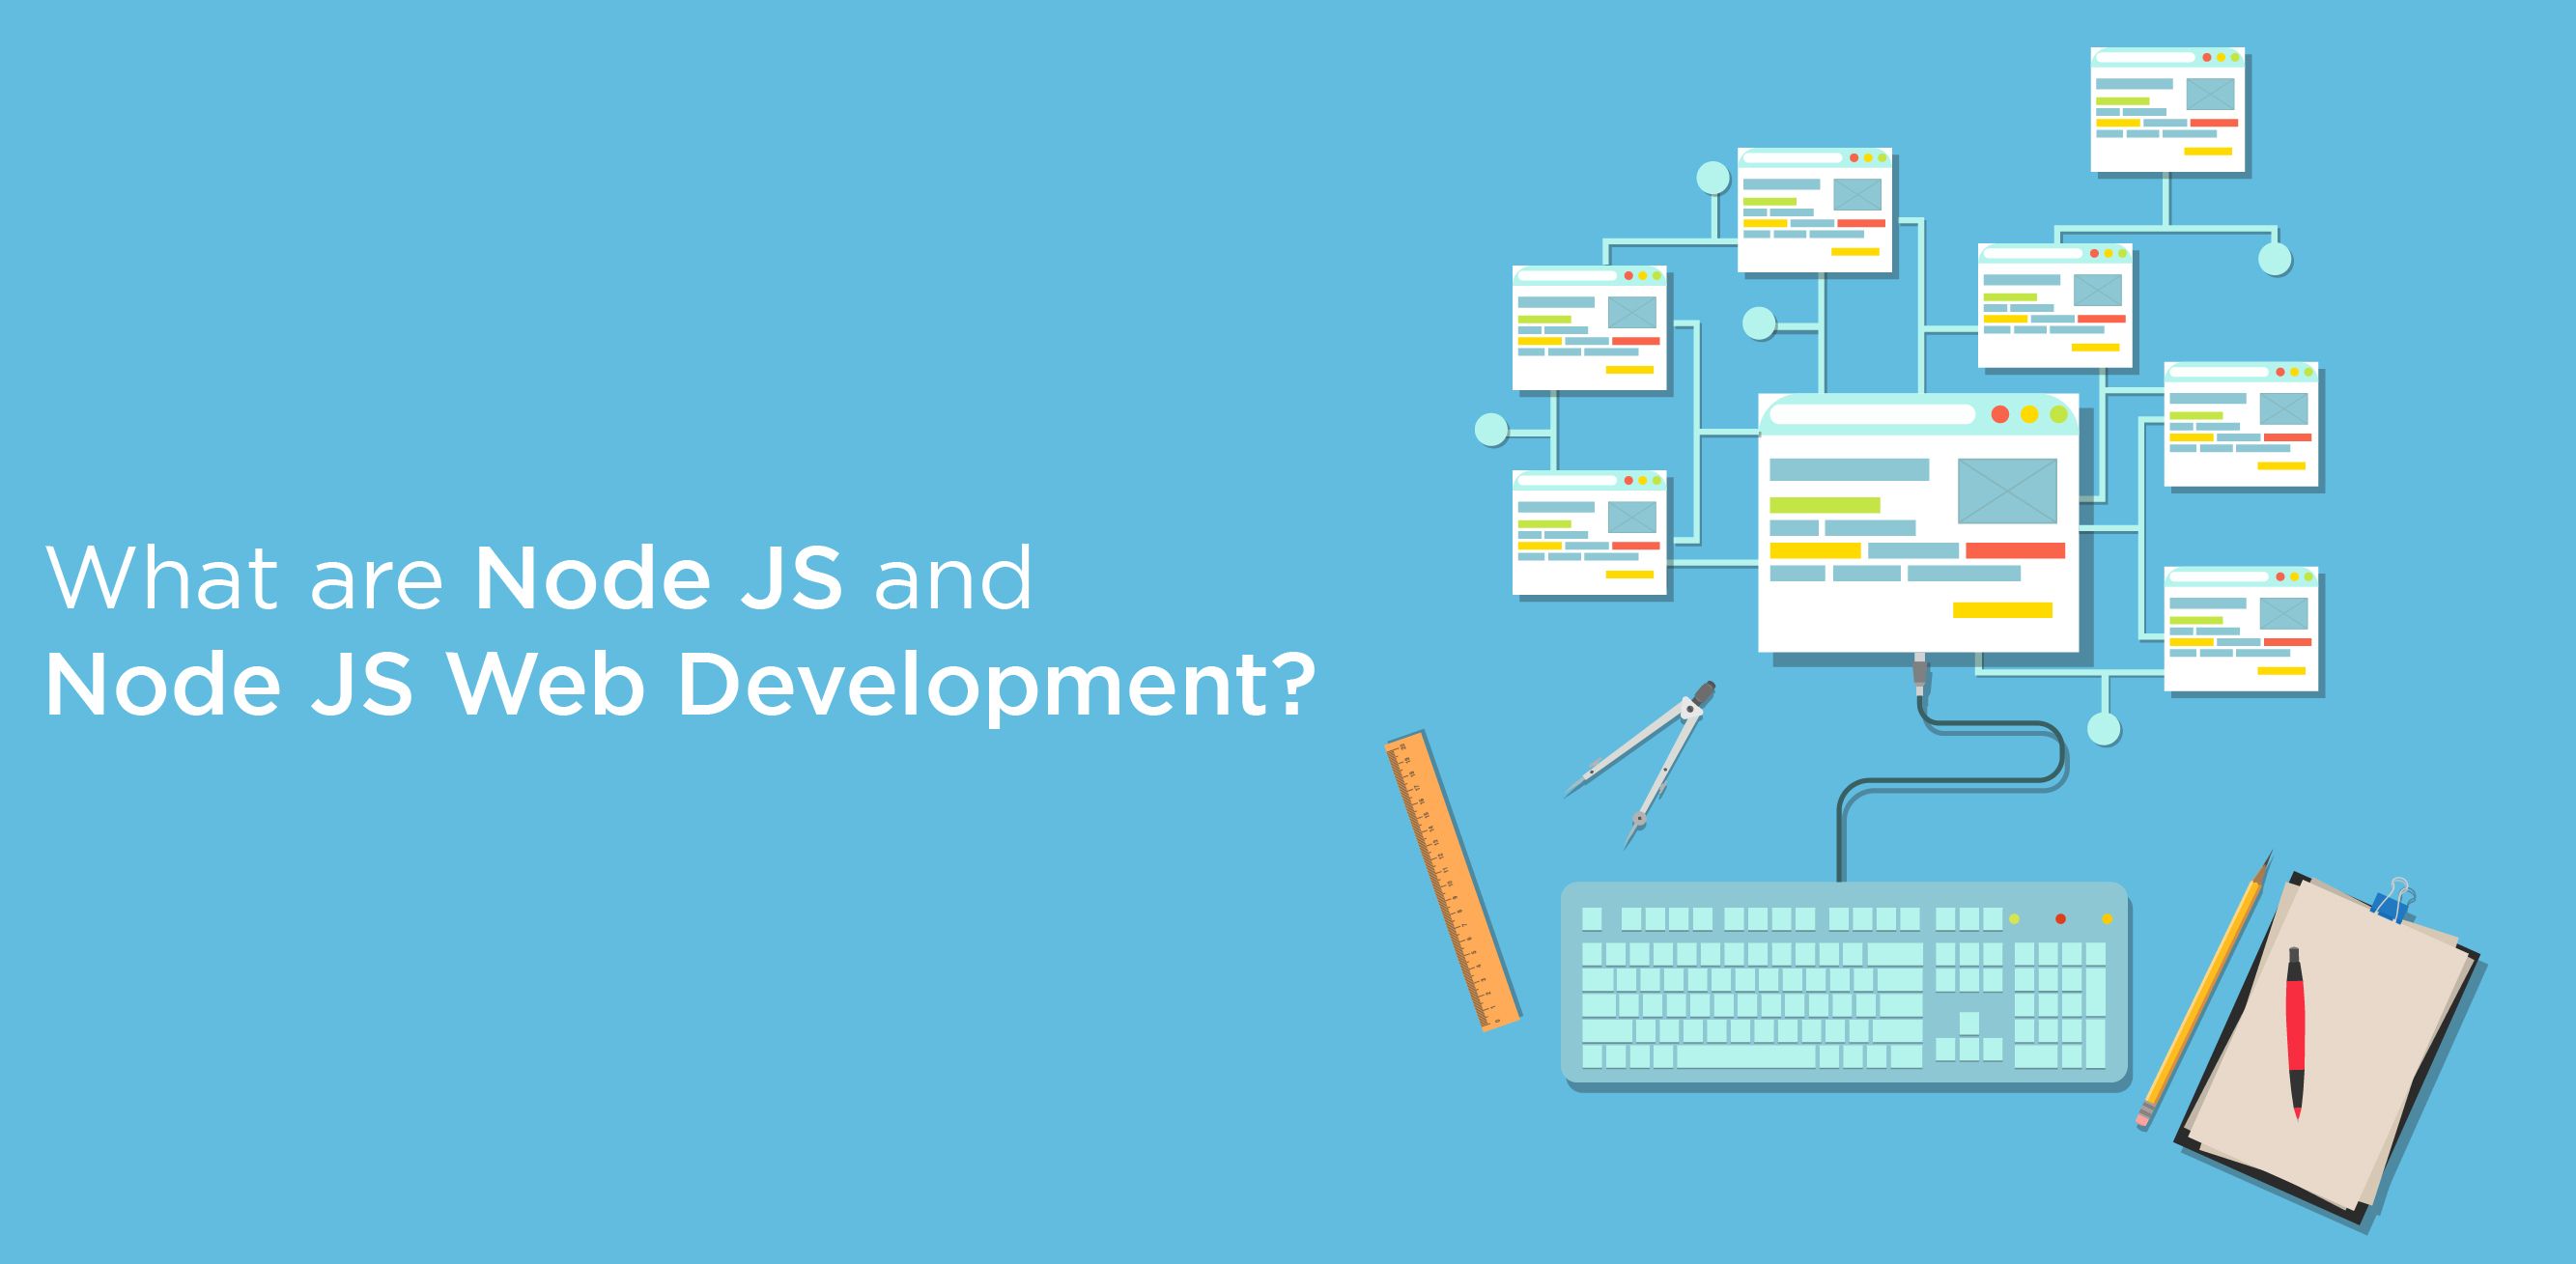 What are Node JS and Node JS Web Development?